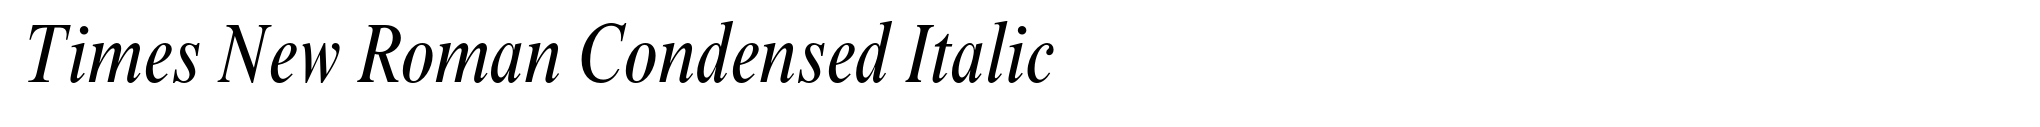 Times New Roman Condensed Italic image